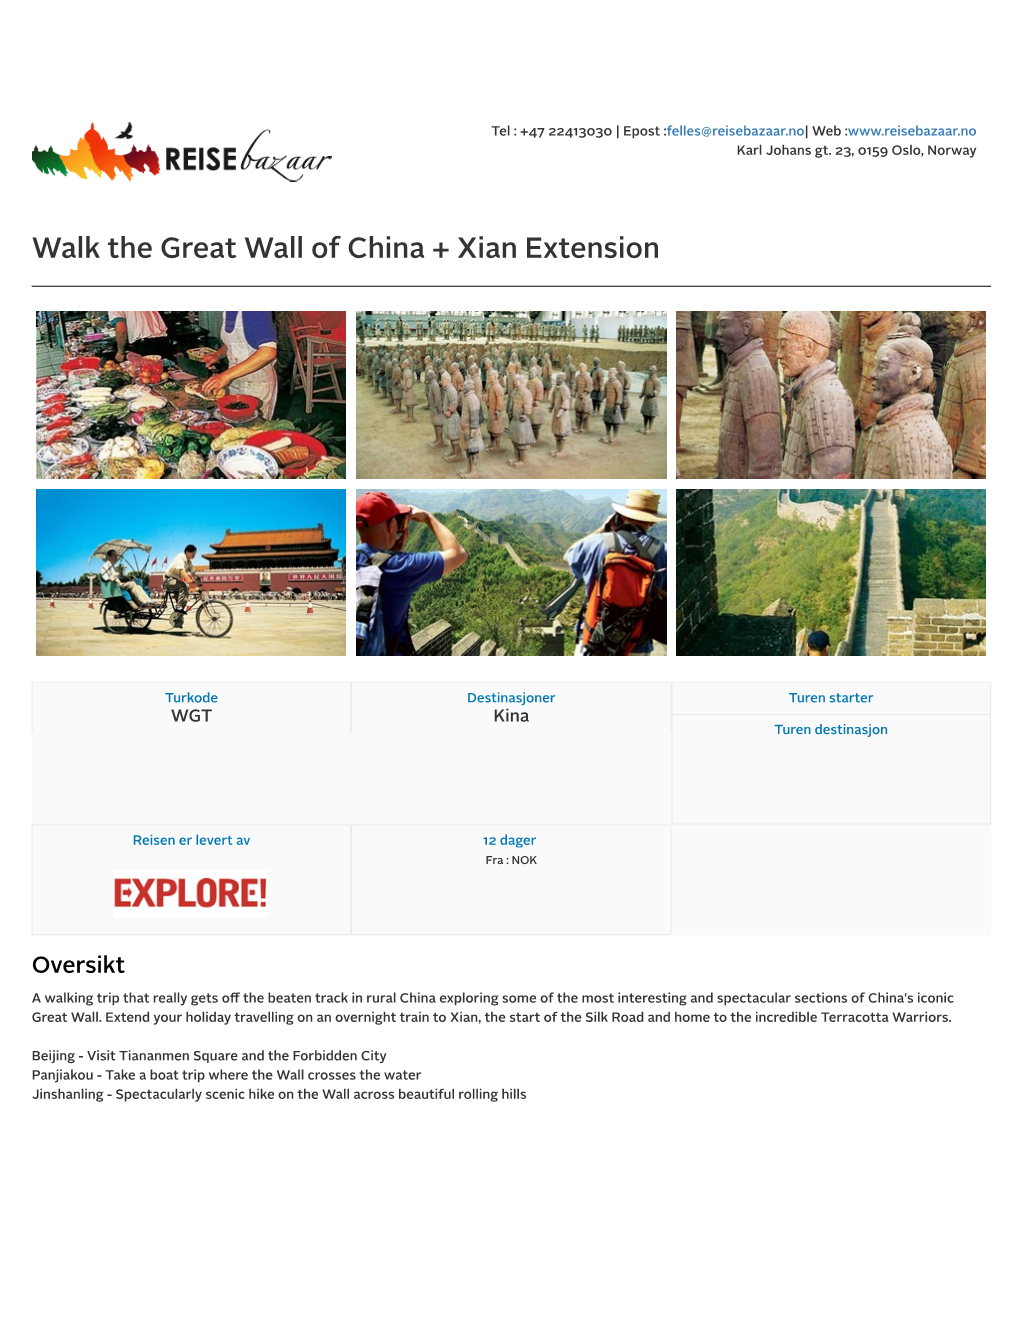 Walk the Great Wall + Xian Extension